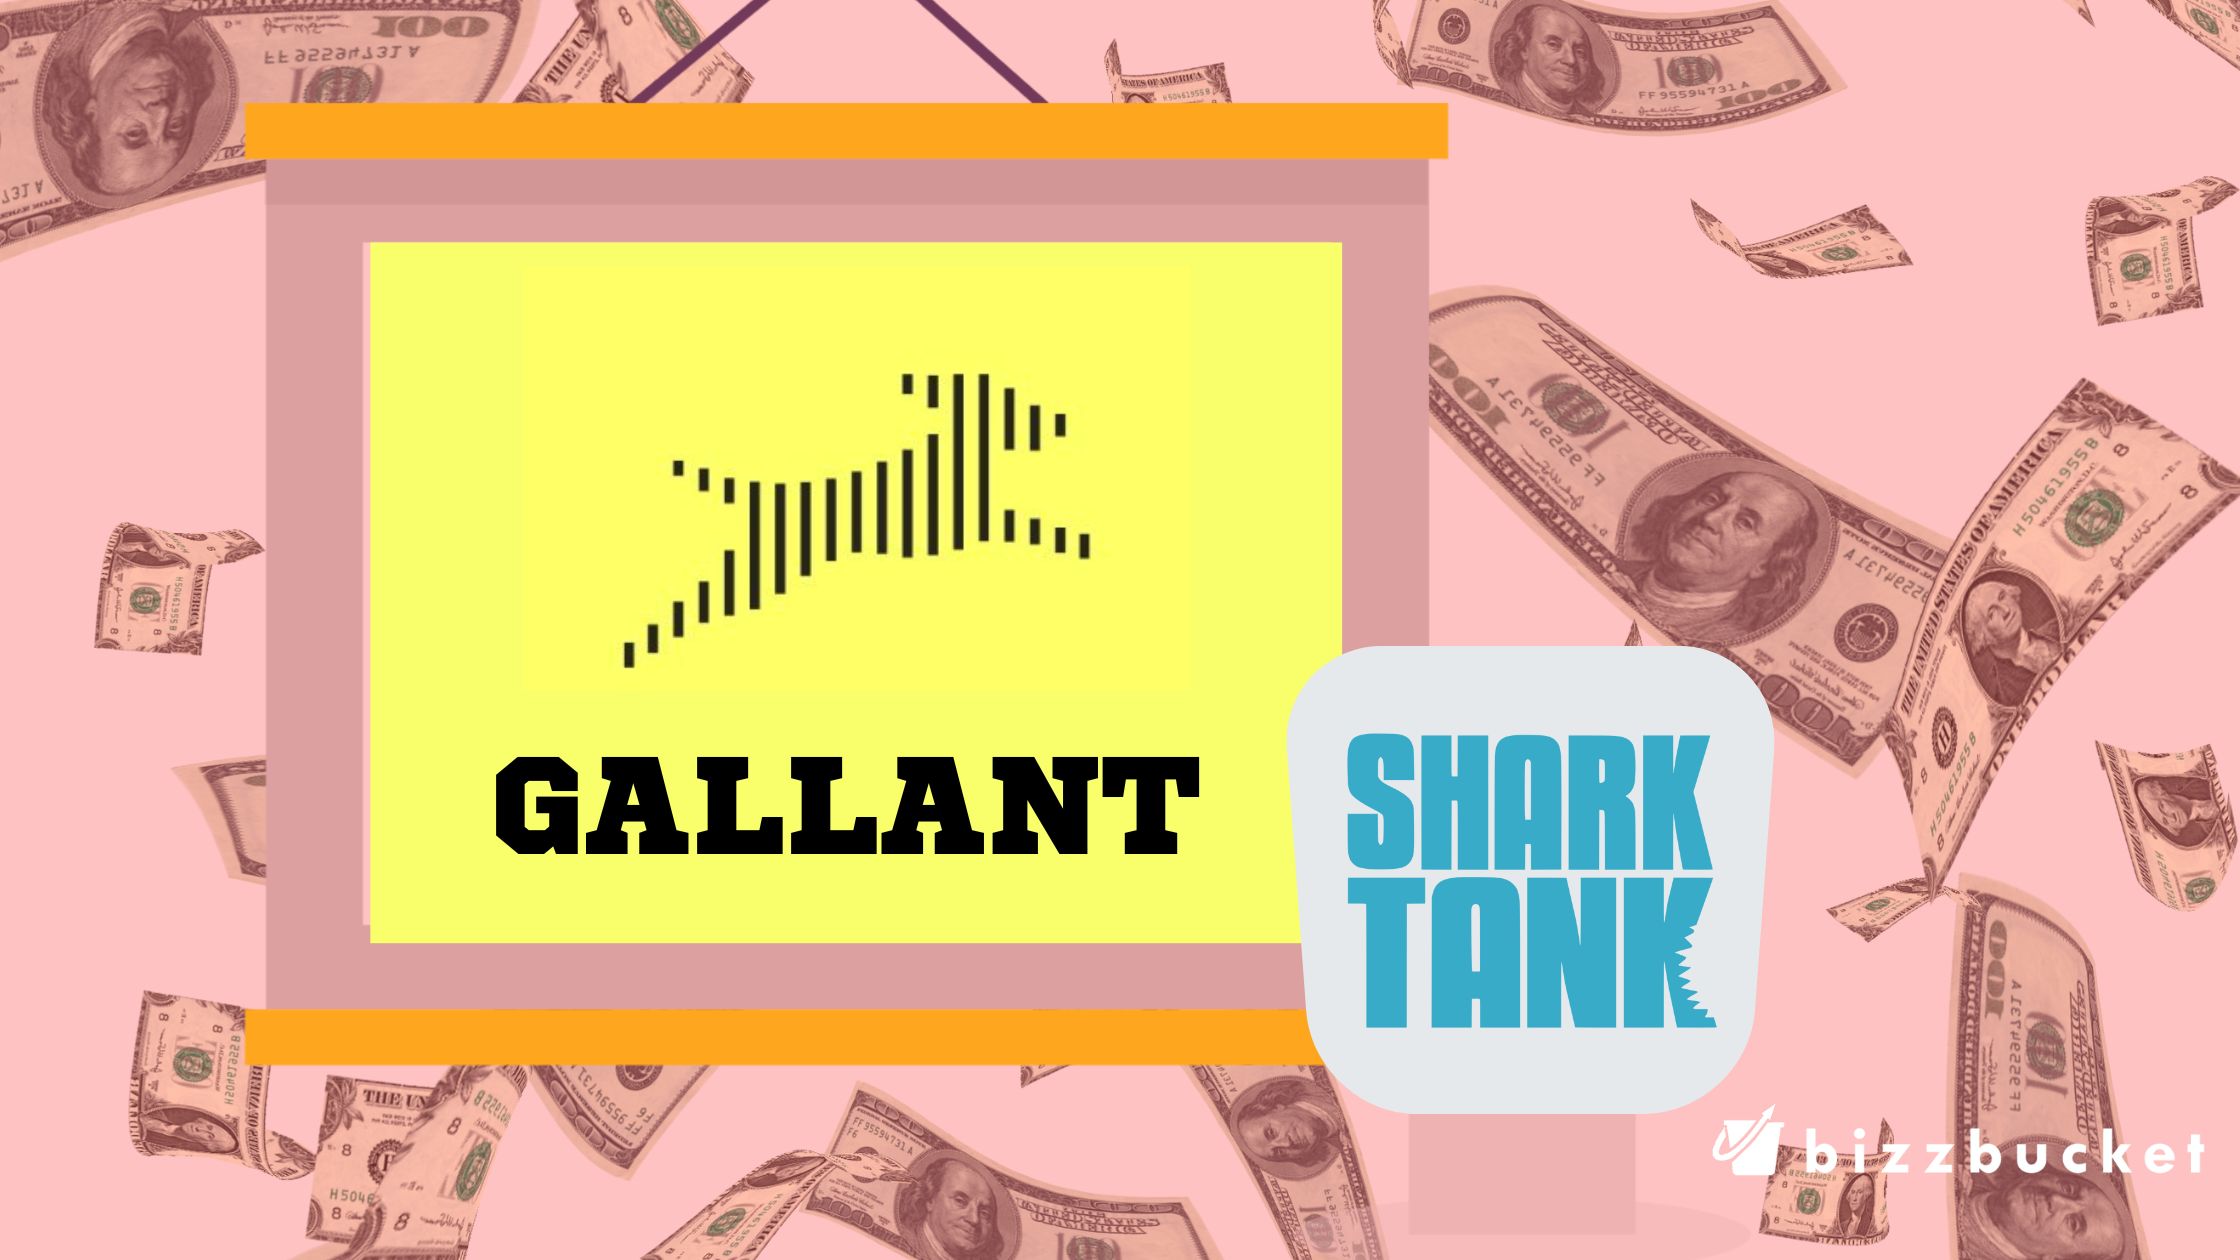 Gallant shark tank update